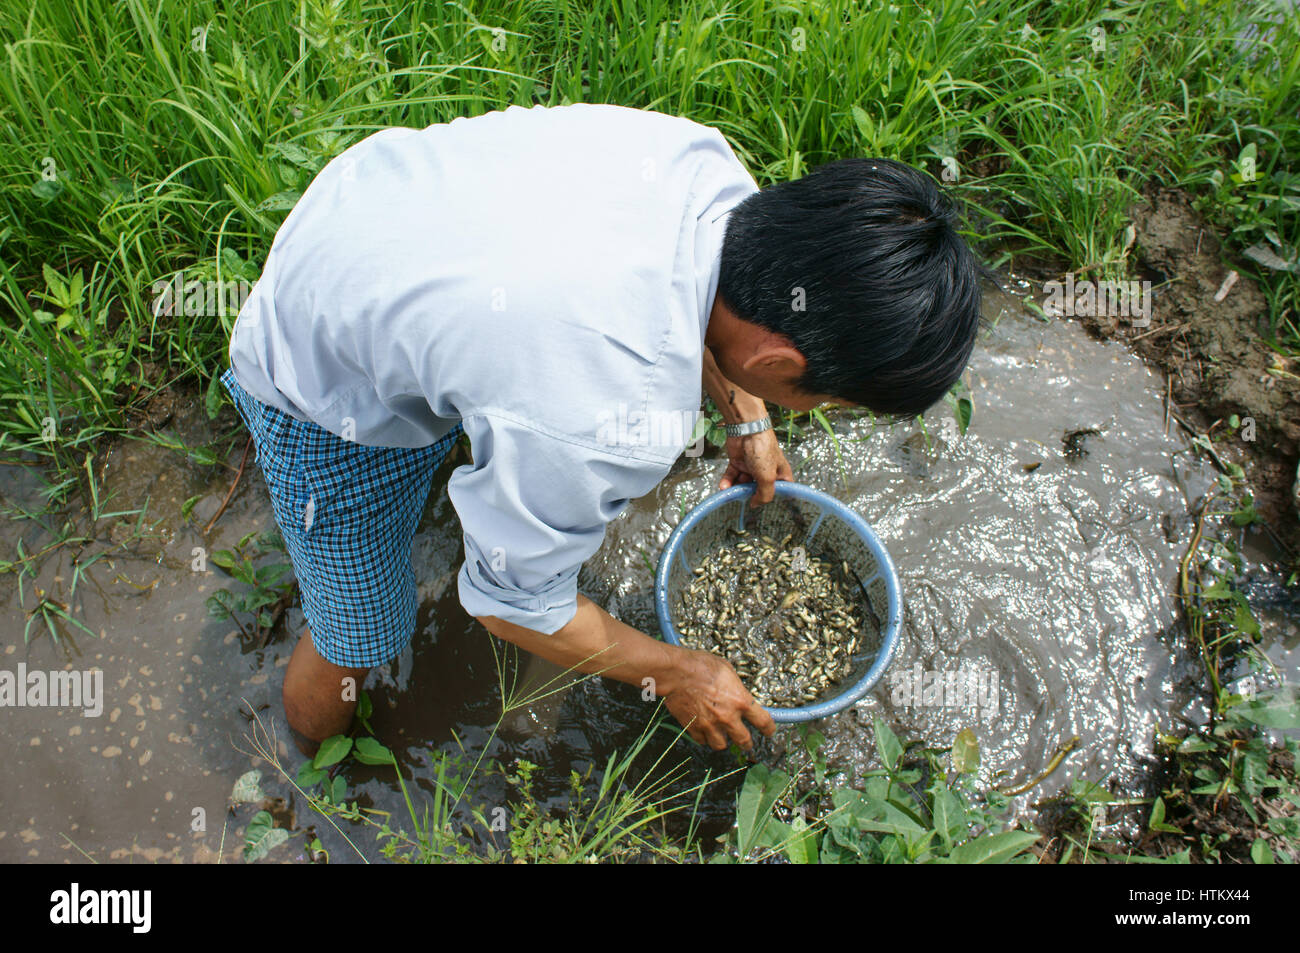 LANGE, VIET NAM - JULY 27: Vietnamesisch Mensch Fische fangen auf Schlamm Wasser, Dong Dong als Jungfische lecker Essen im Mekong-Delta Landschaft, dieser Fluss ist Stockfoto